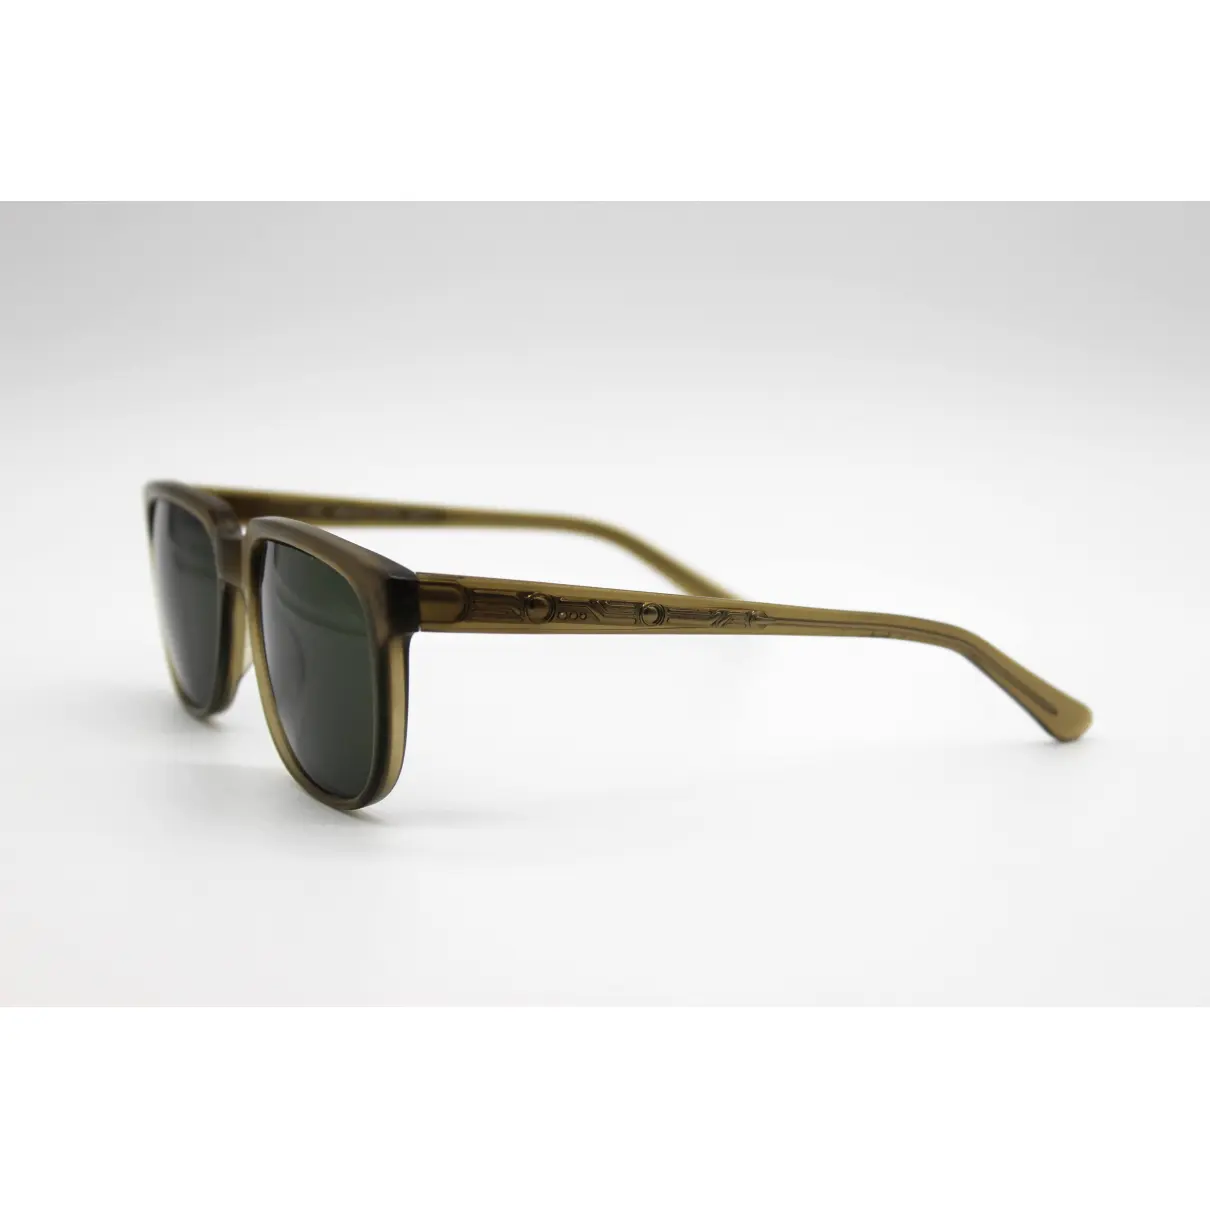 Sunglasses Kansai Yamamoto - Vintage